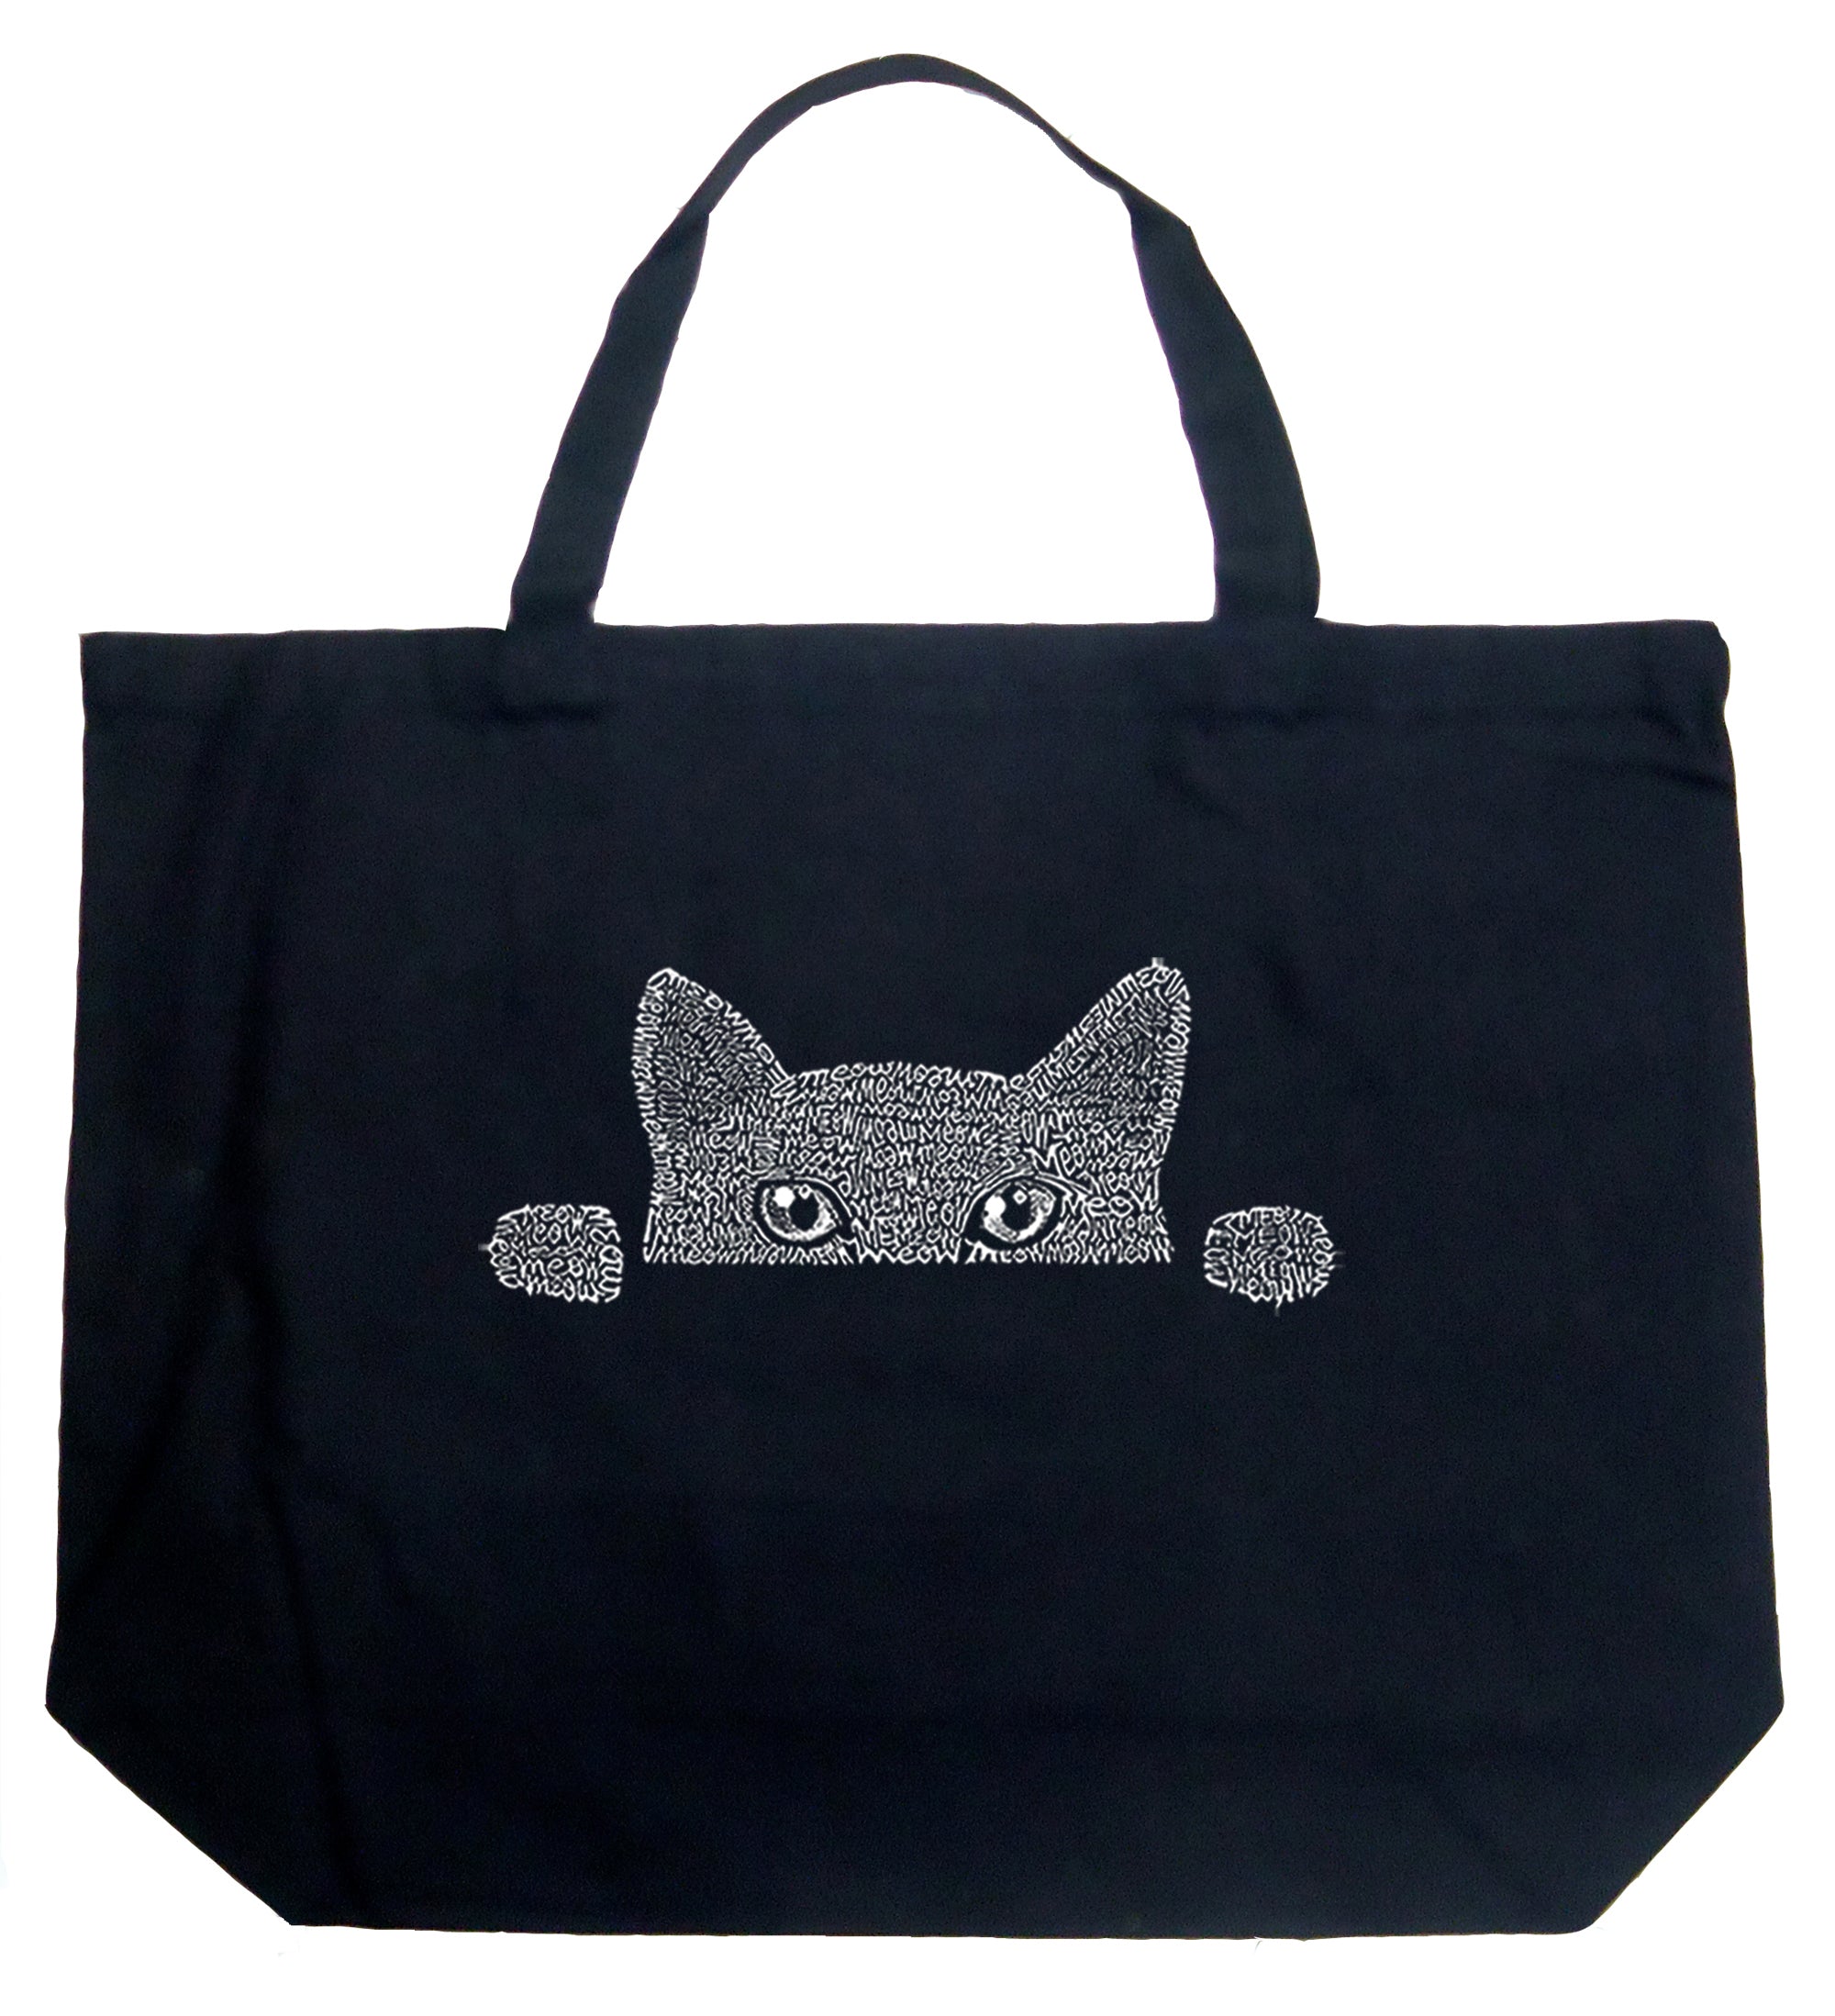 Peeking Cat - Large Word Art Tote Bag - Large - Black